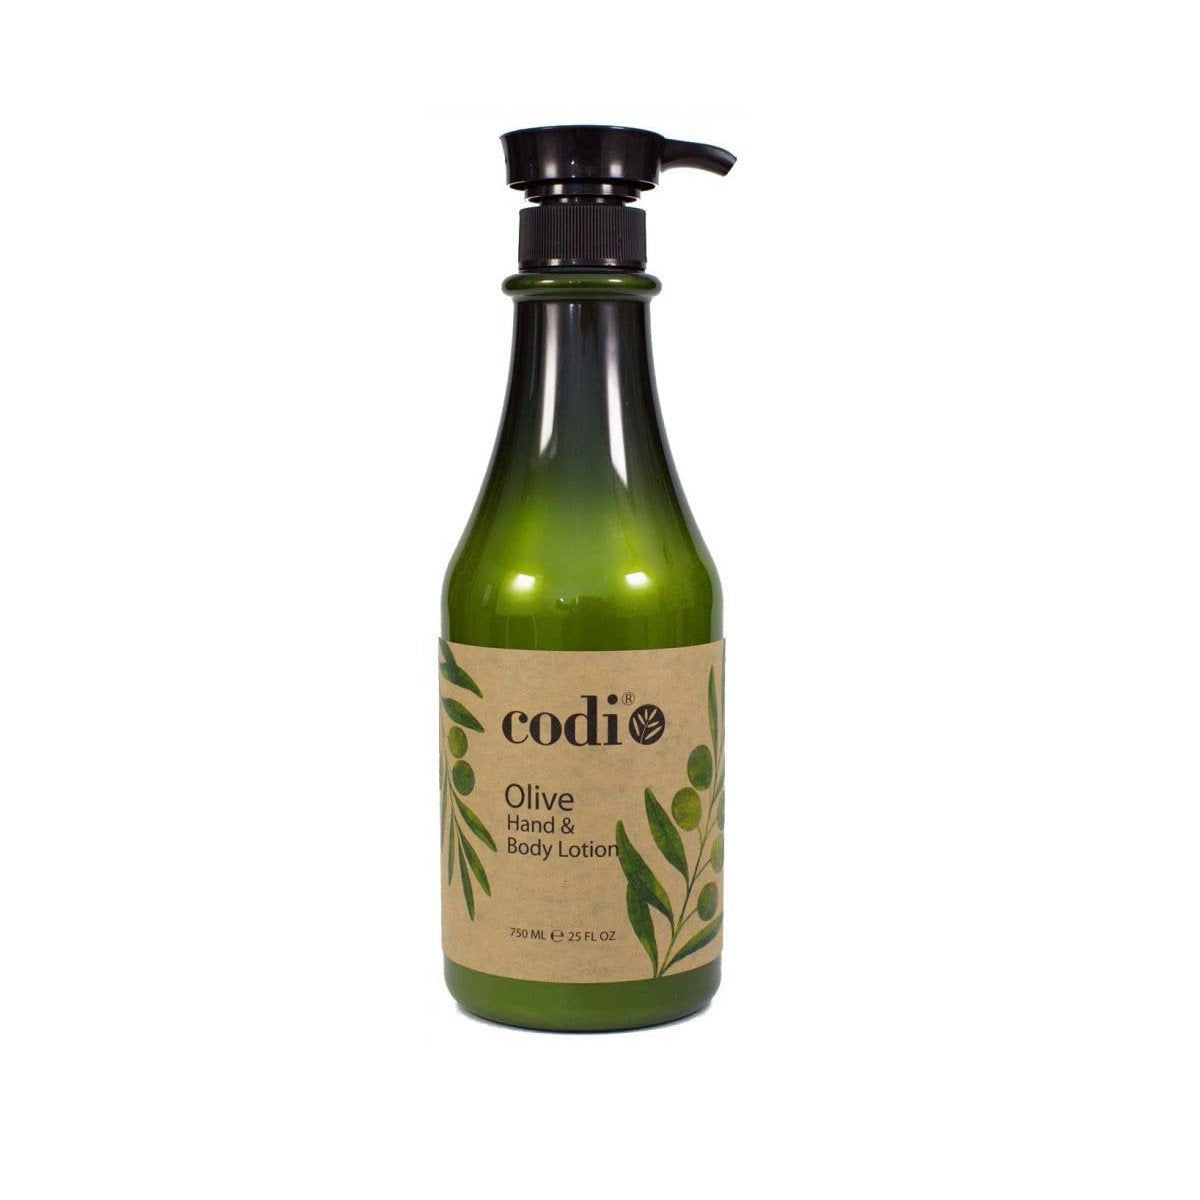 Codi Hand & Body Lotion - Olive - 750ml